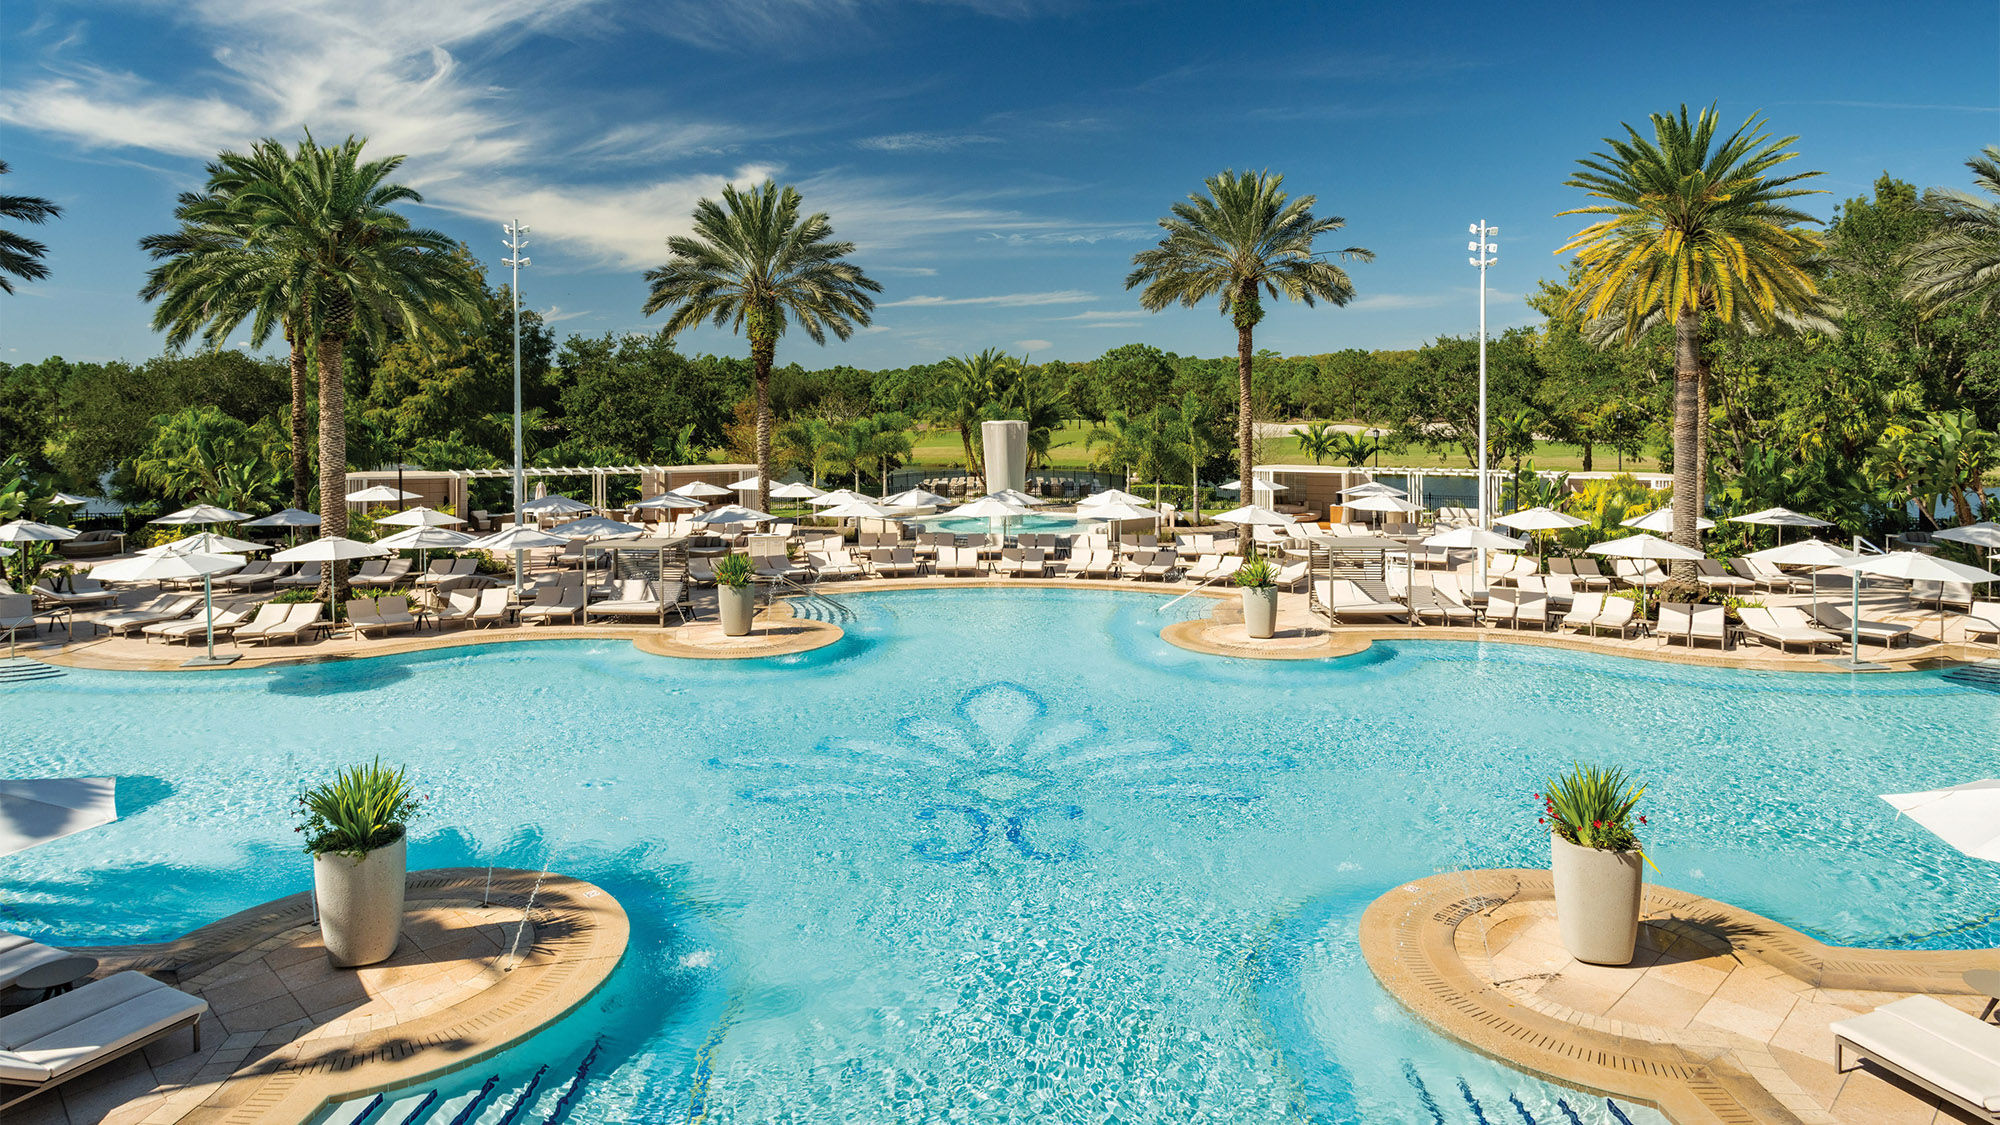 The pool at the Ritz-Carlton Orlando, Grande Lakes.